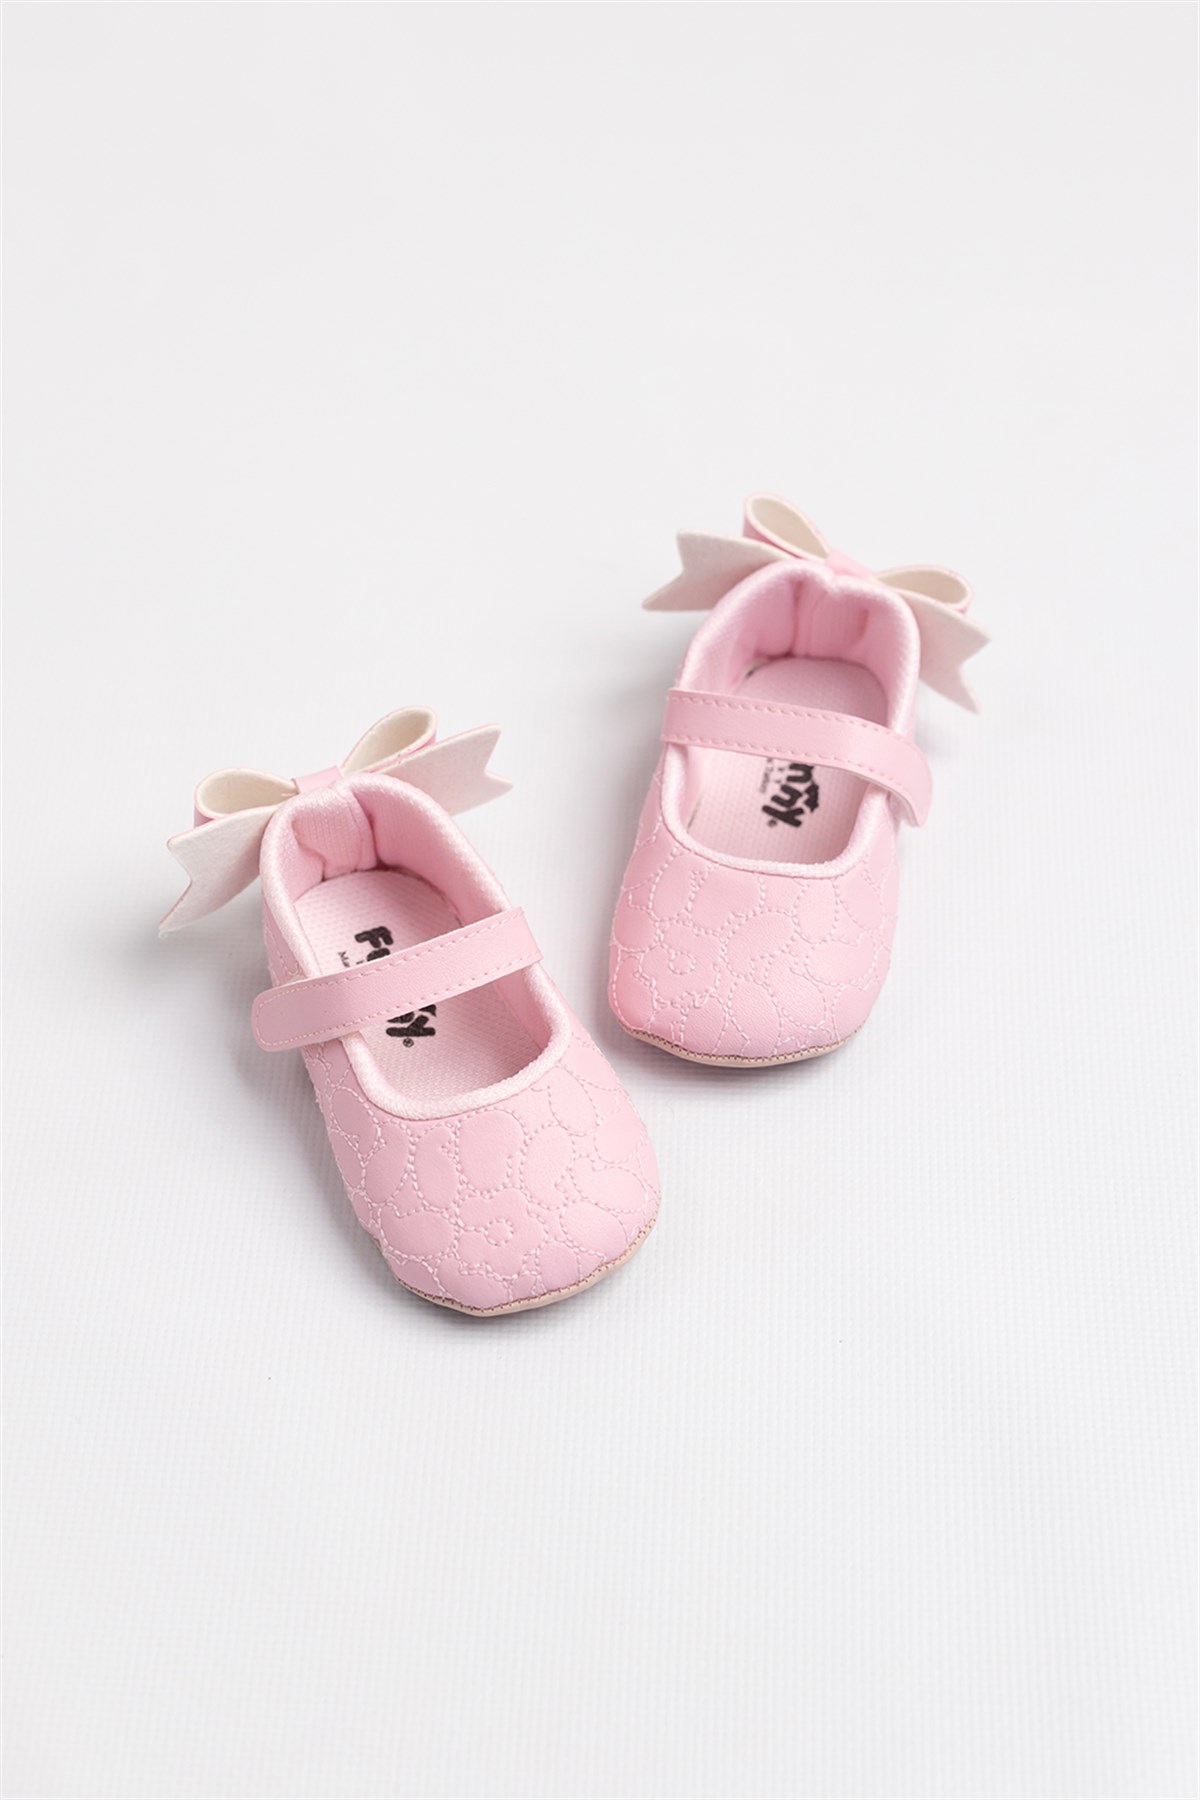 Pembe Topuğu Fiyonklu Kız Bebek Ayakkabı | Le Mabelle